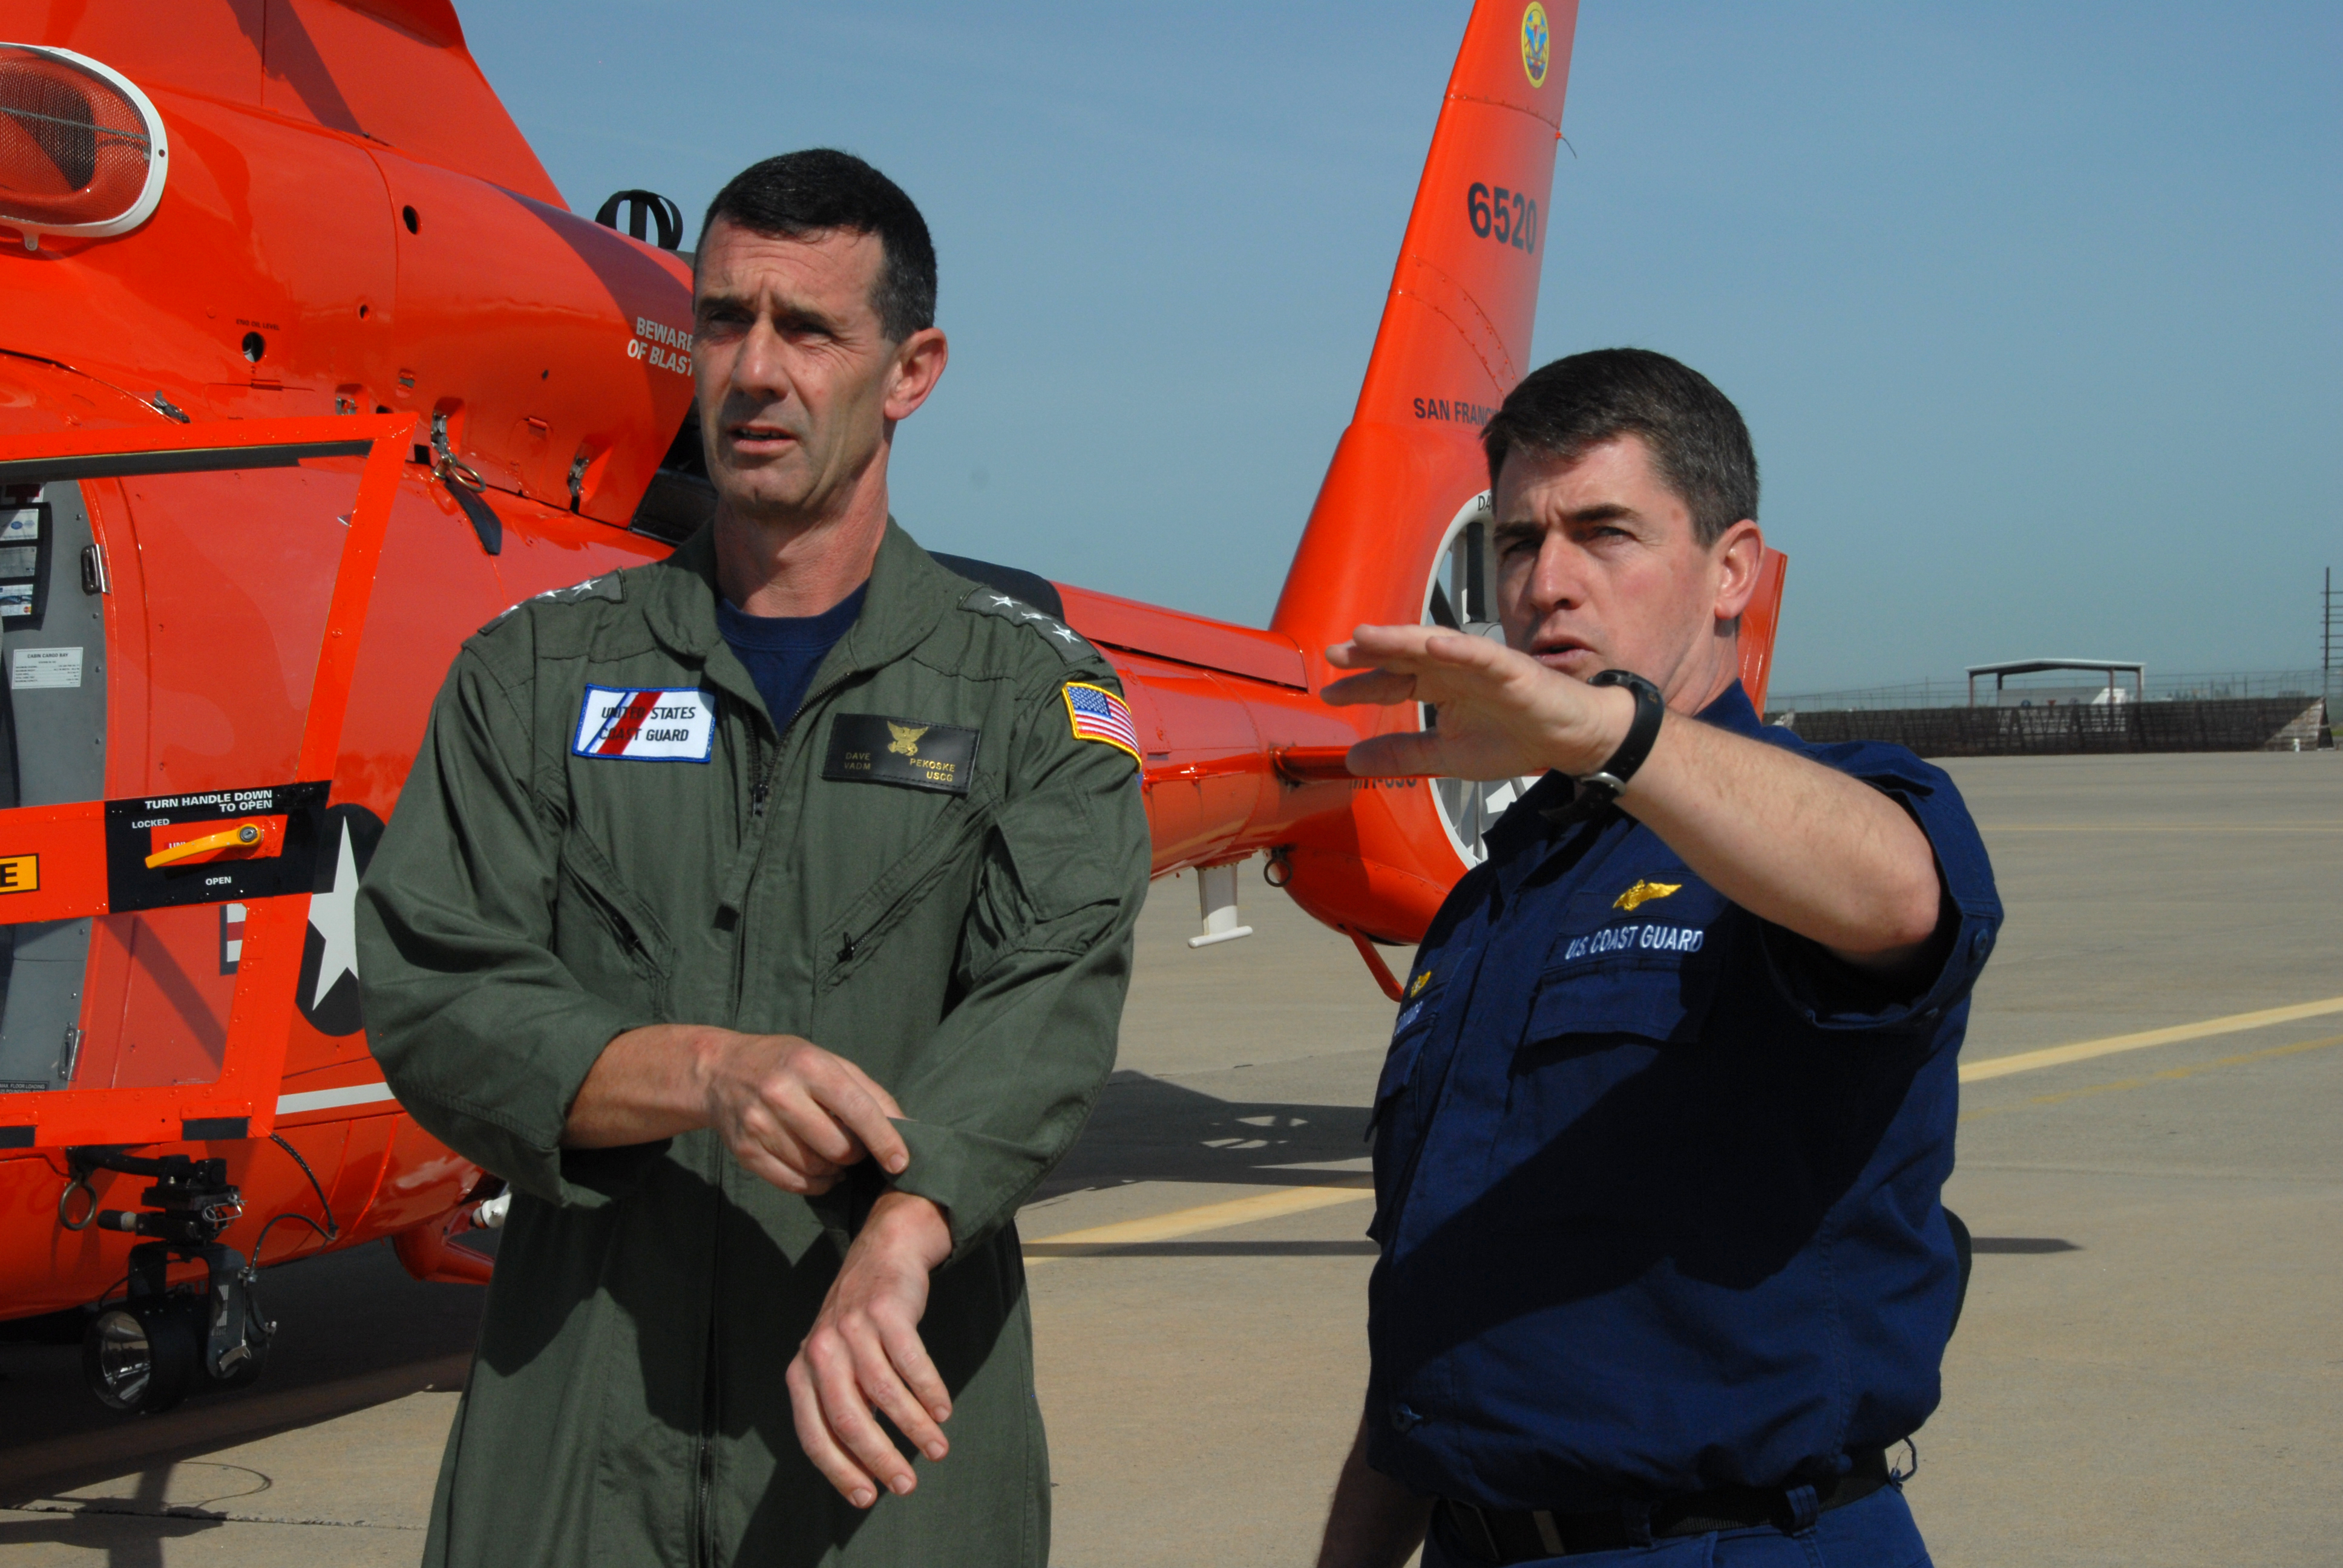 Administrator Pekoske served as the 26th Vice Commandant of the U.S. Coast Guard.